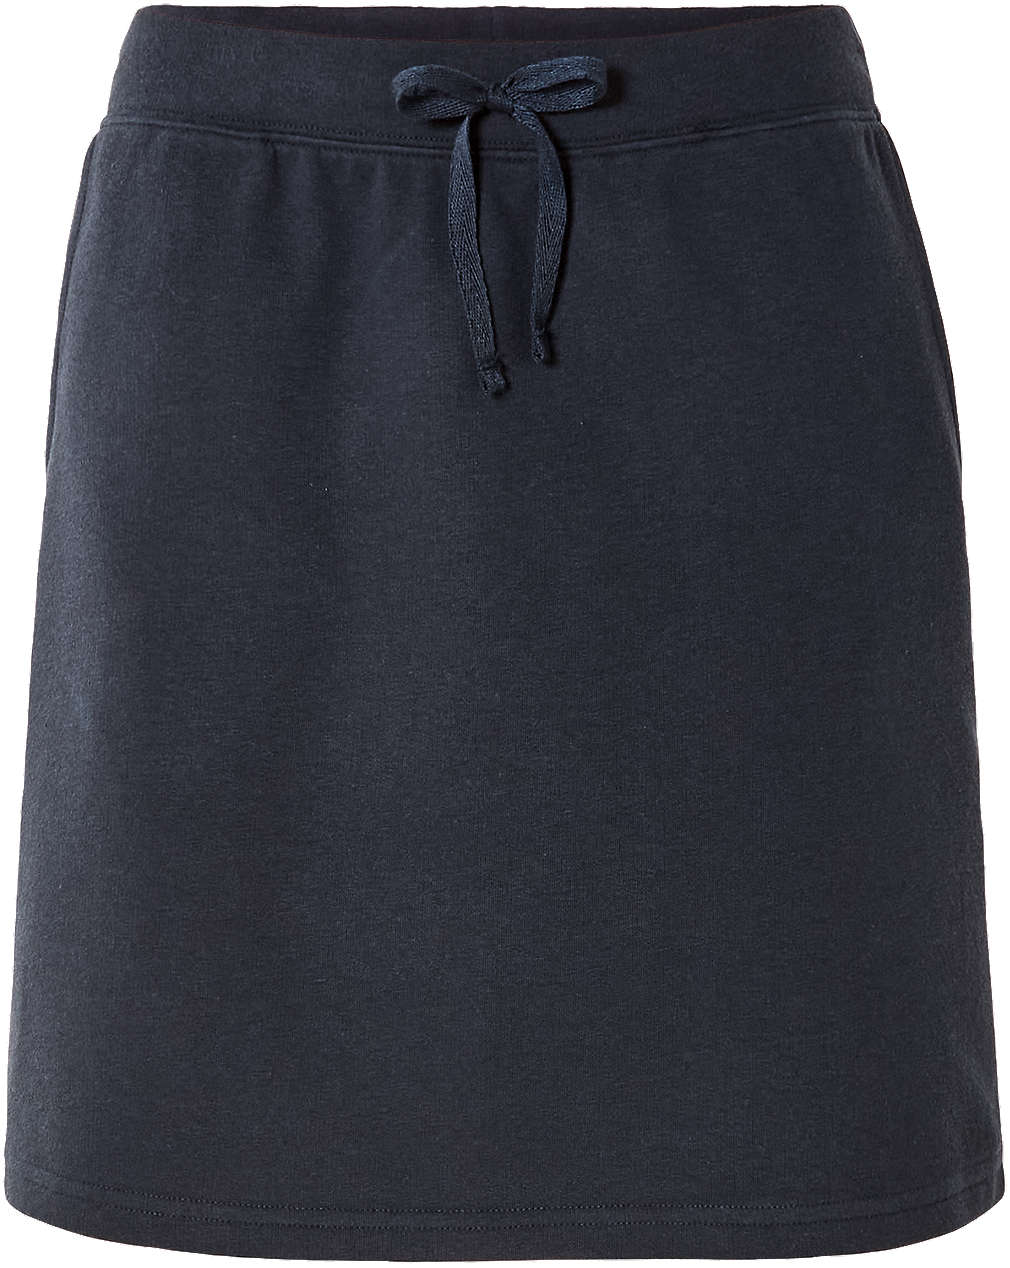 Fotografija ponude Oyanda Ženska suknja